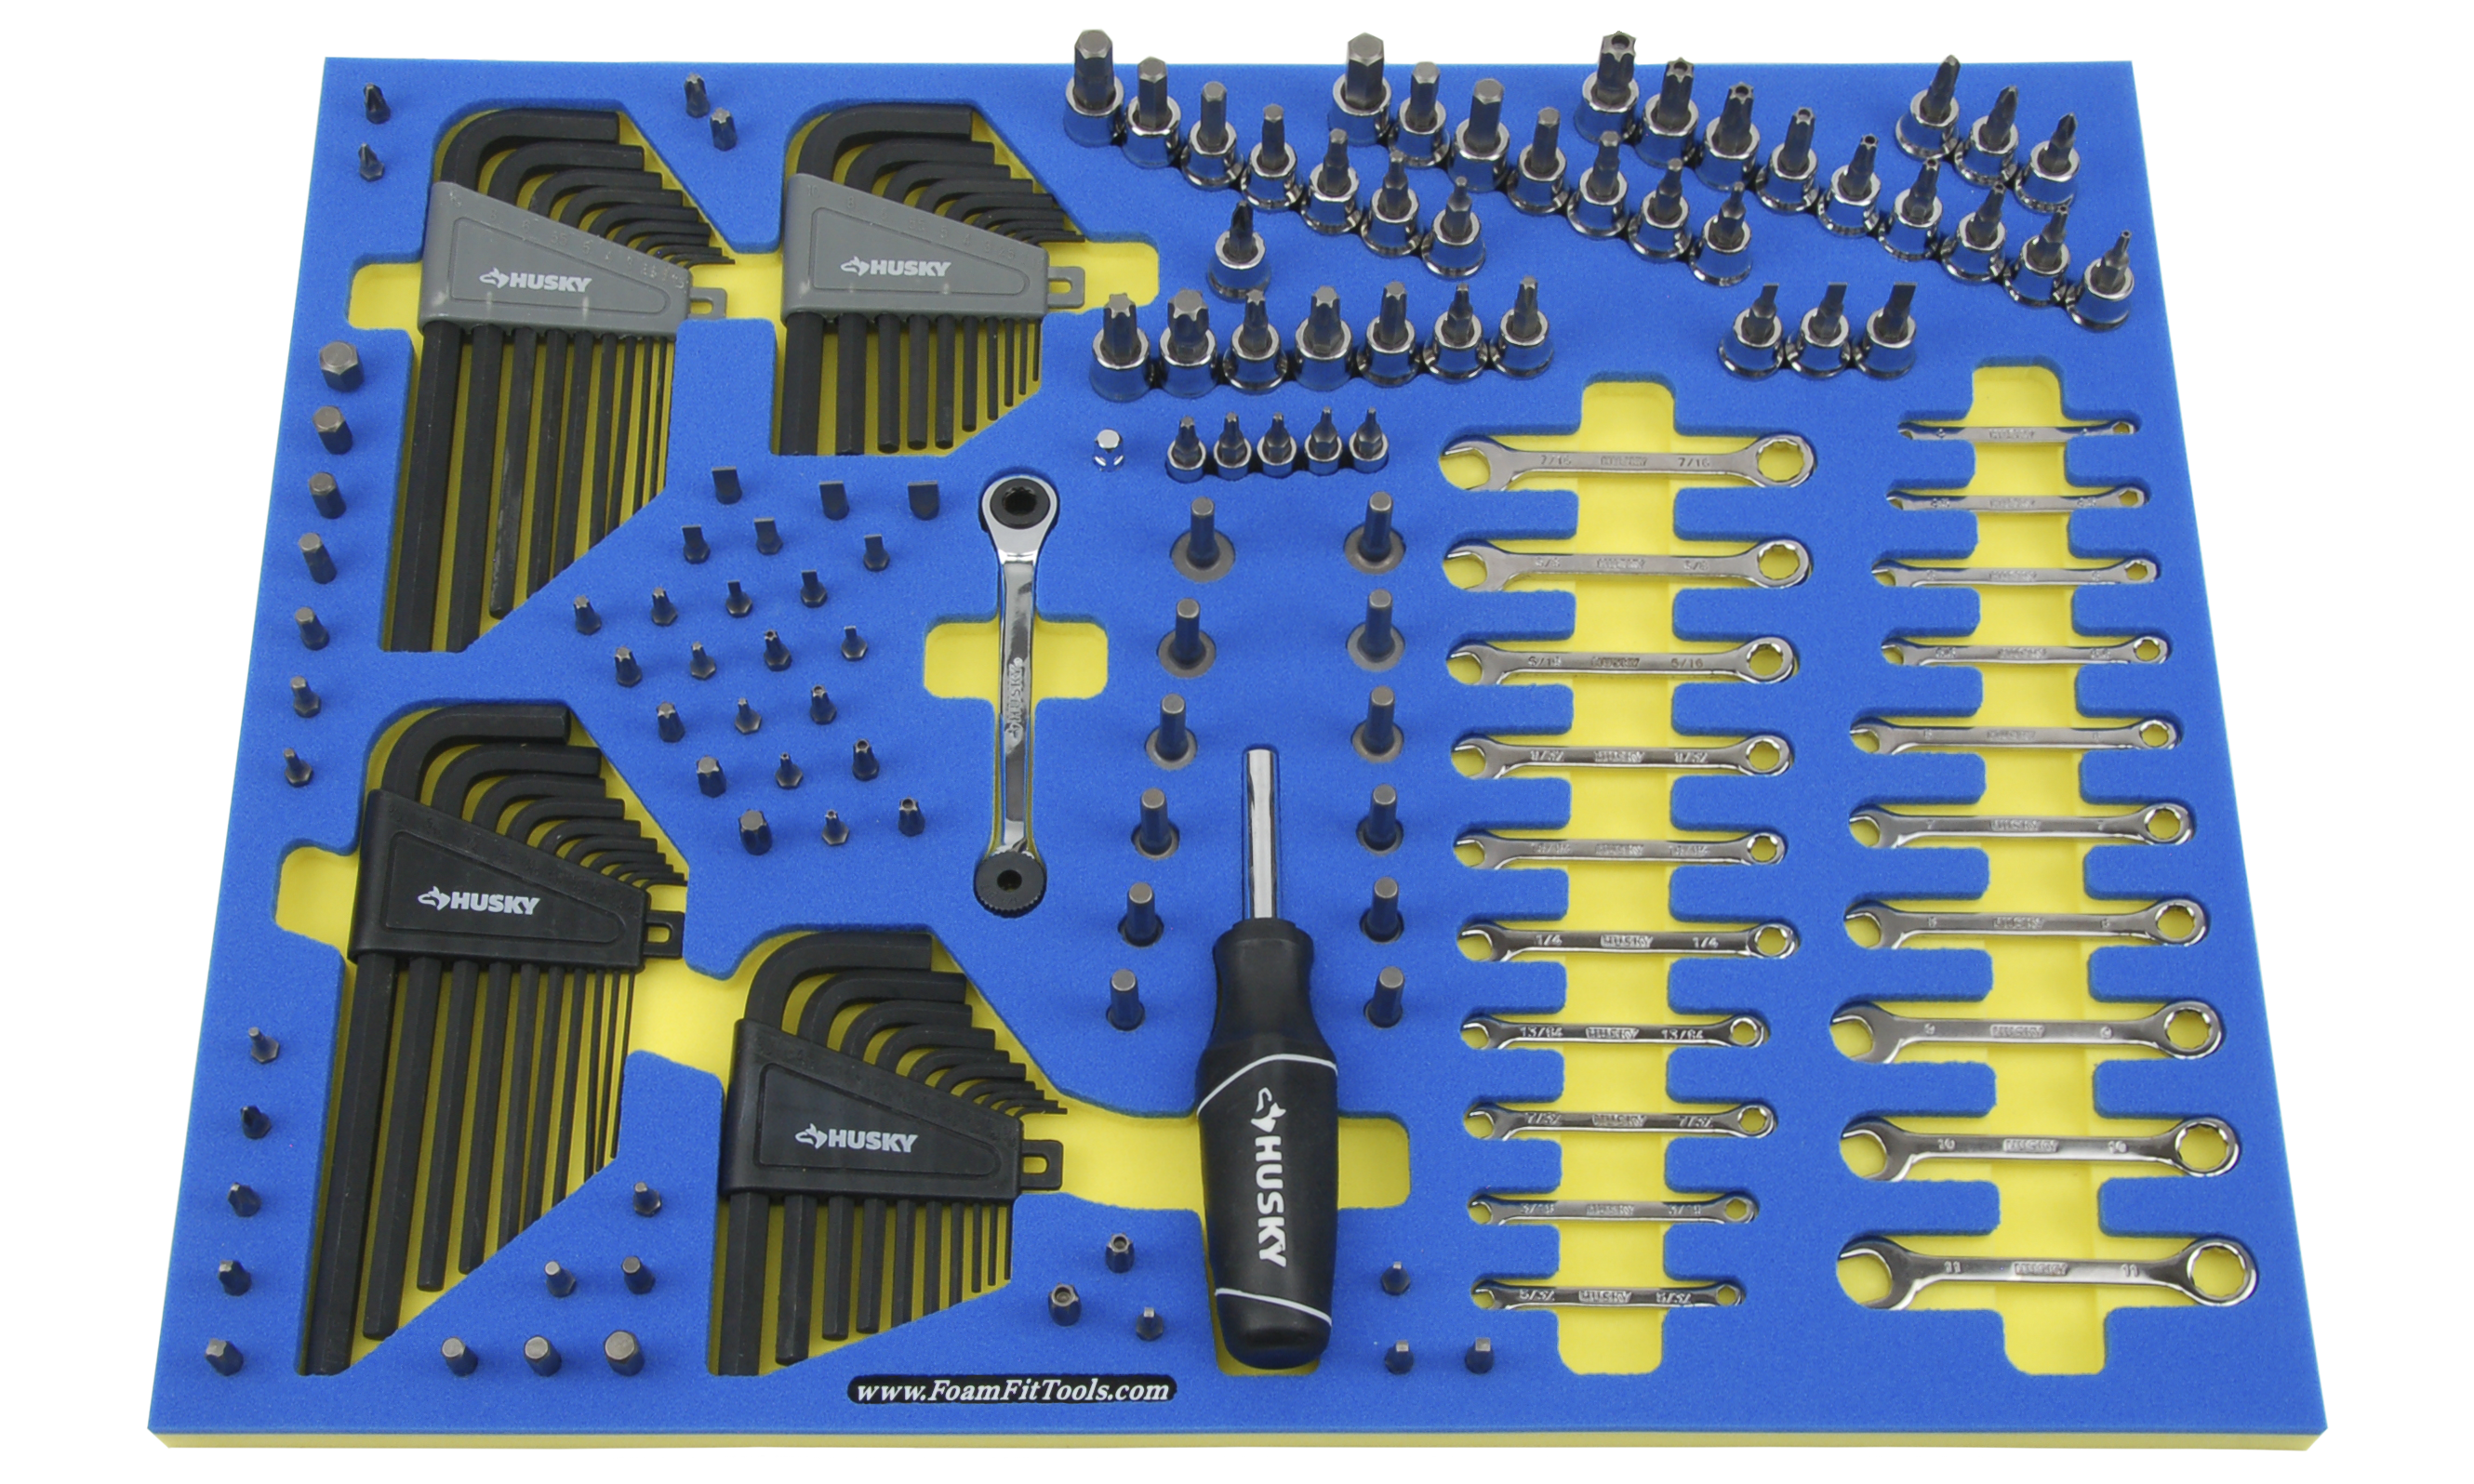 organizer F-02522-R2 for the Husky 432-pc mechanics tool set